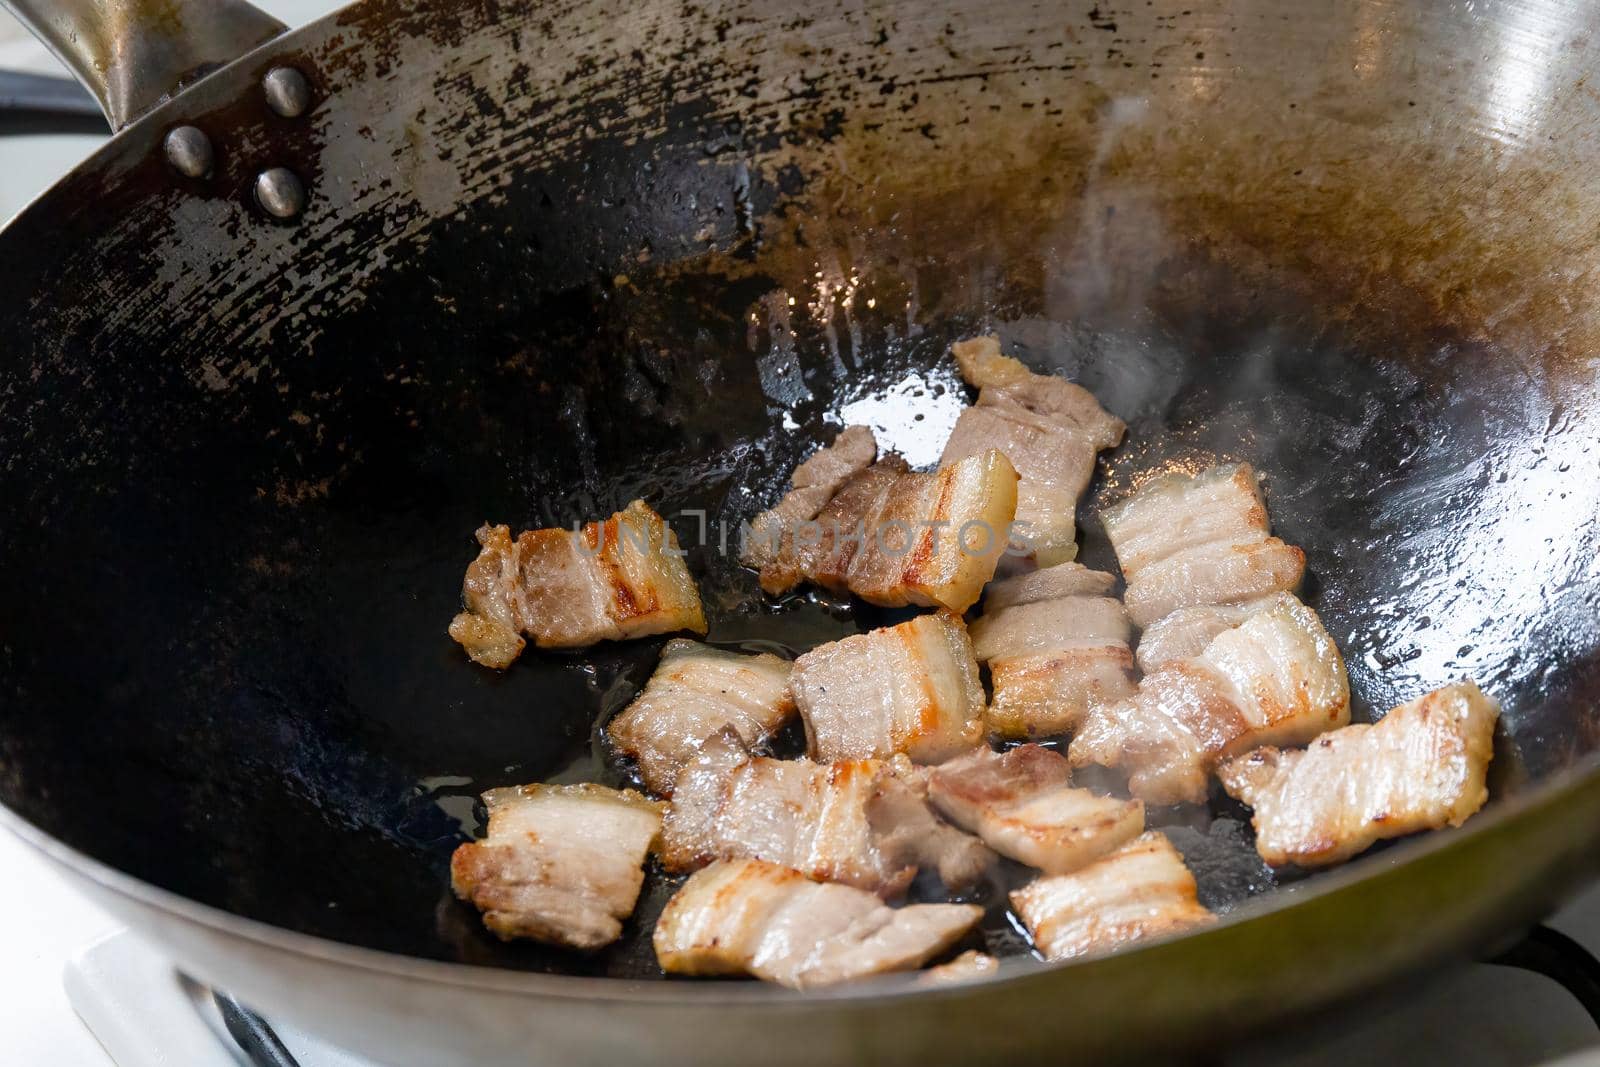 Sliced pork belly stir fried in a hot wok